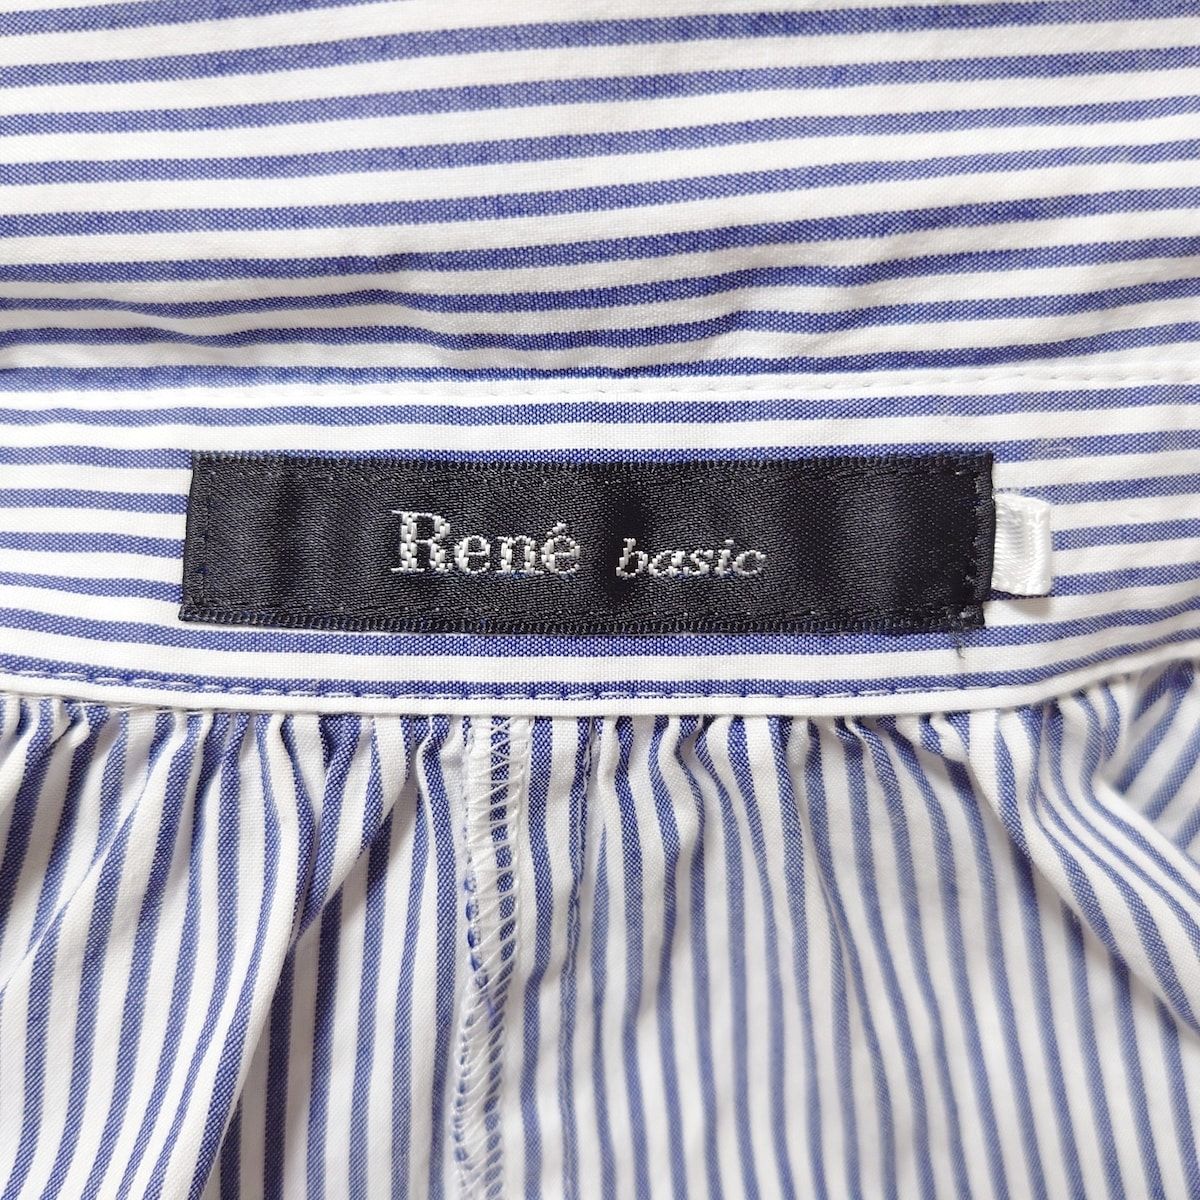 Rene(ルネ) 七分袖シャツブラウス サイズ36 S レディース美品 - 白